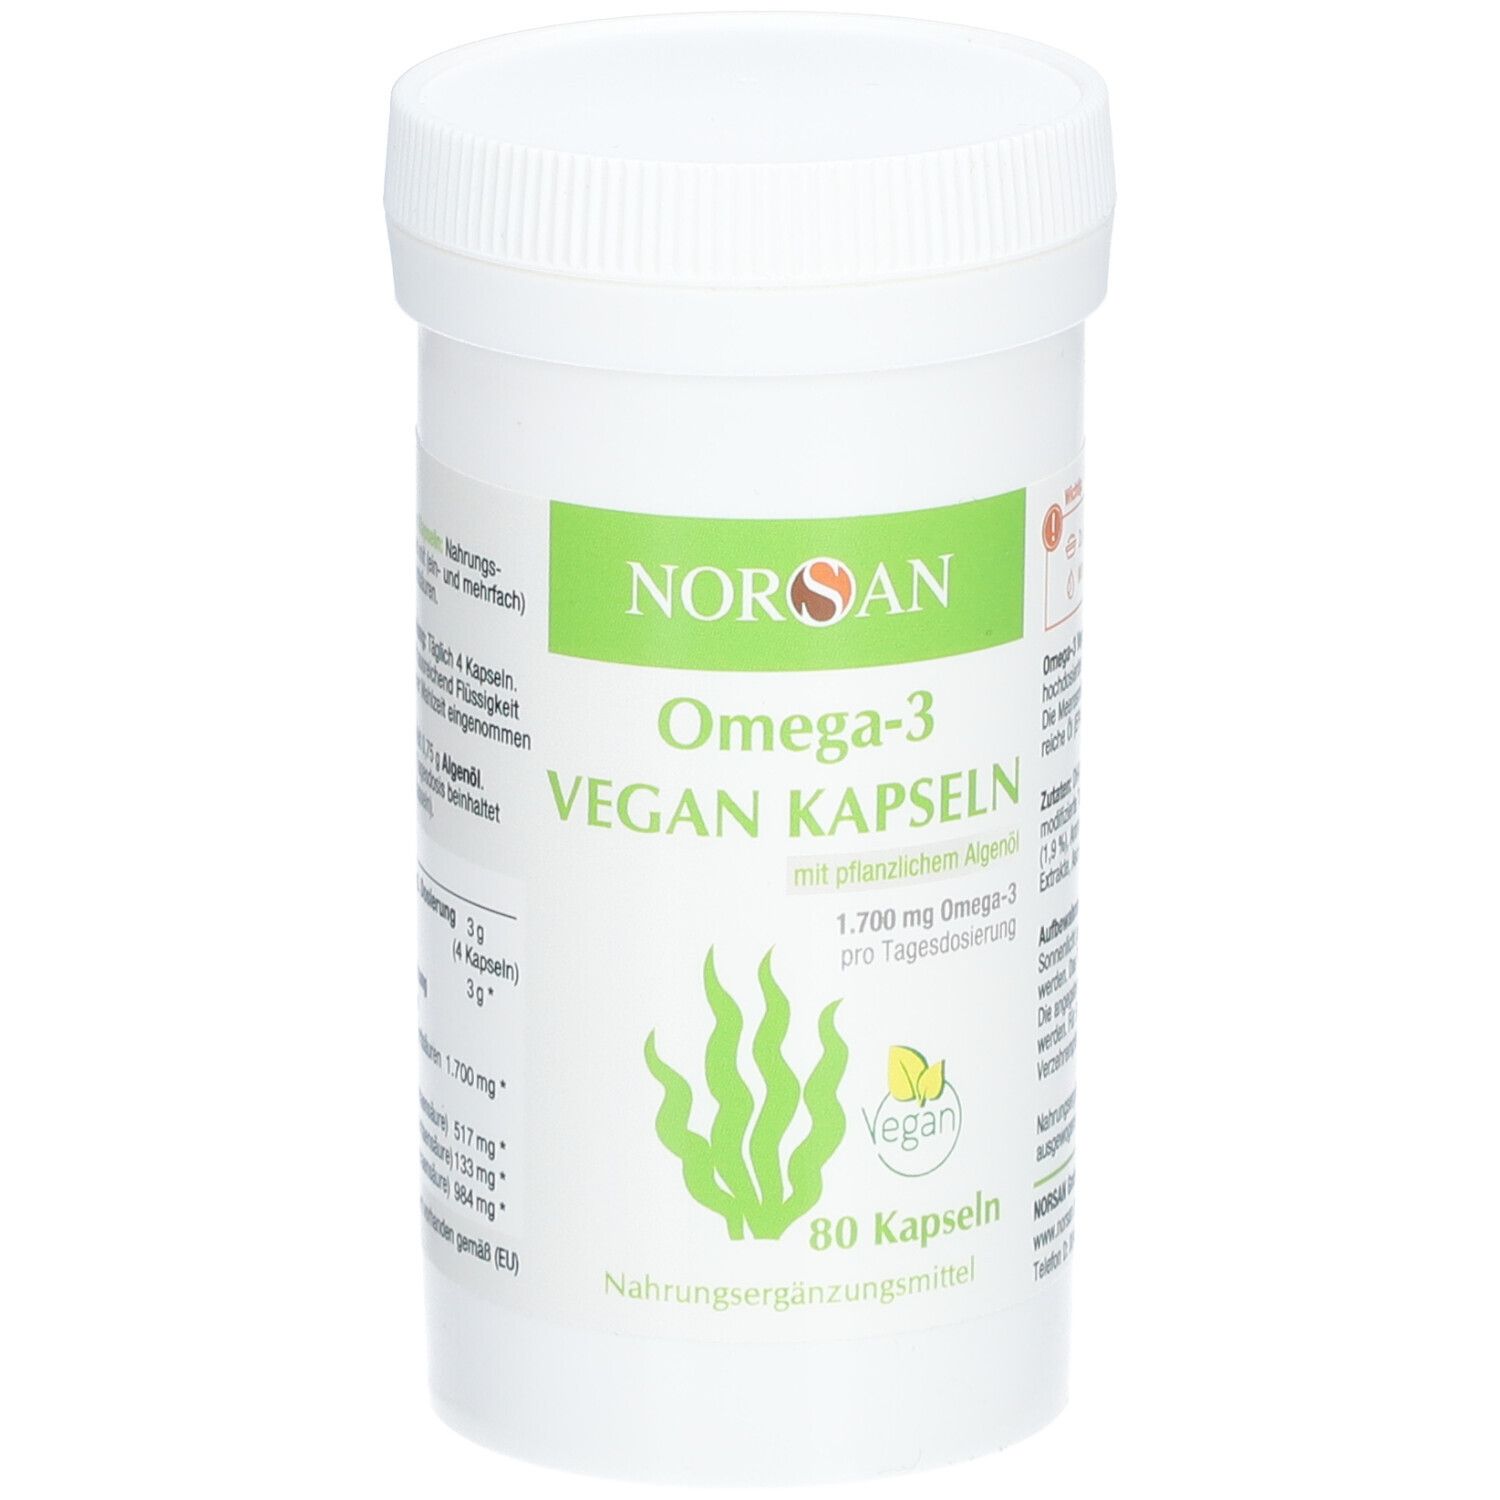 NORSAN Omega-3 Vegan Algenöl Kapseln